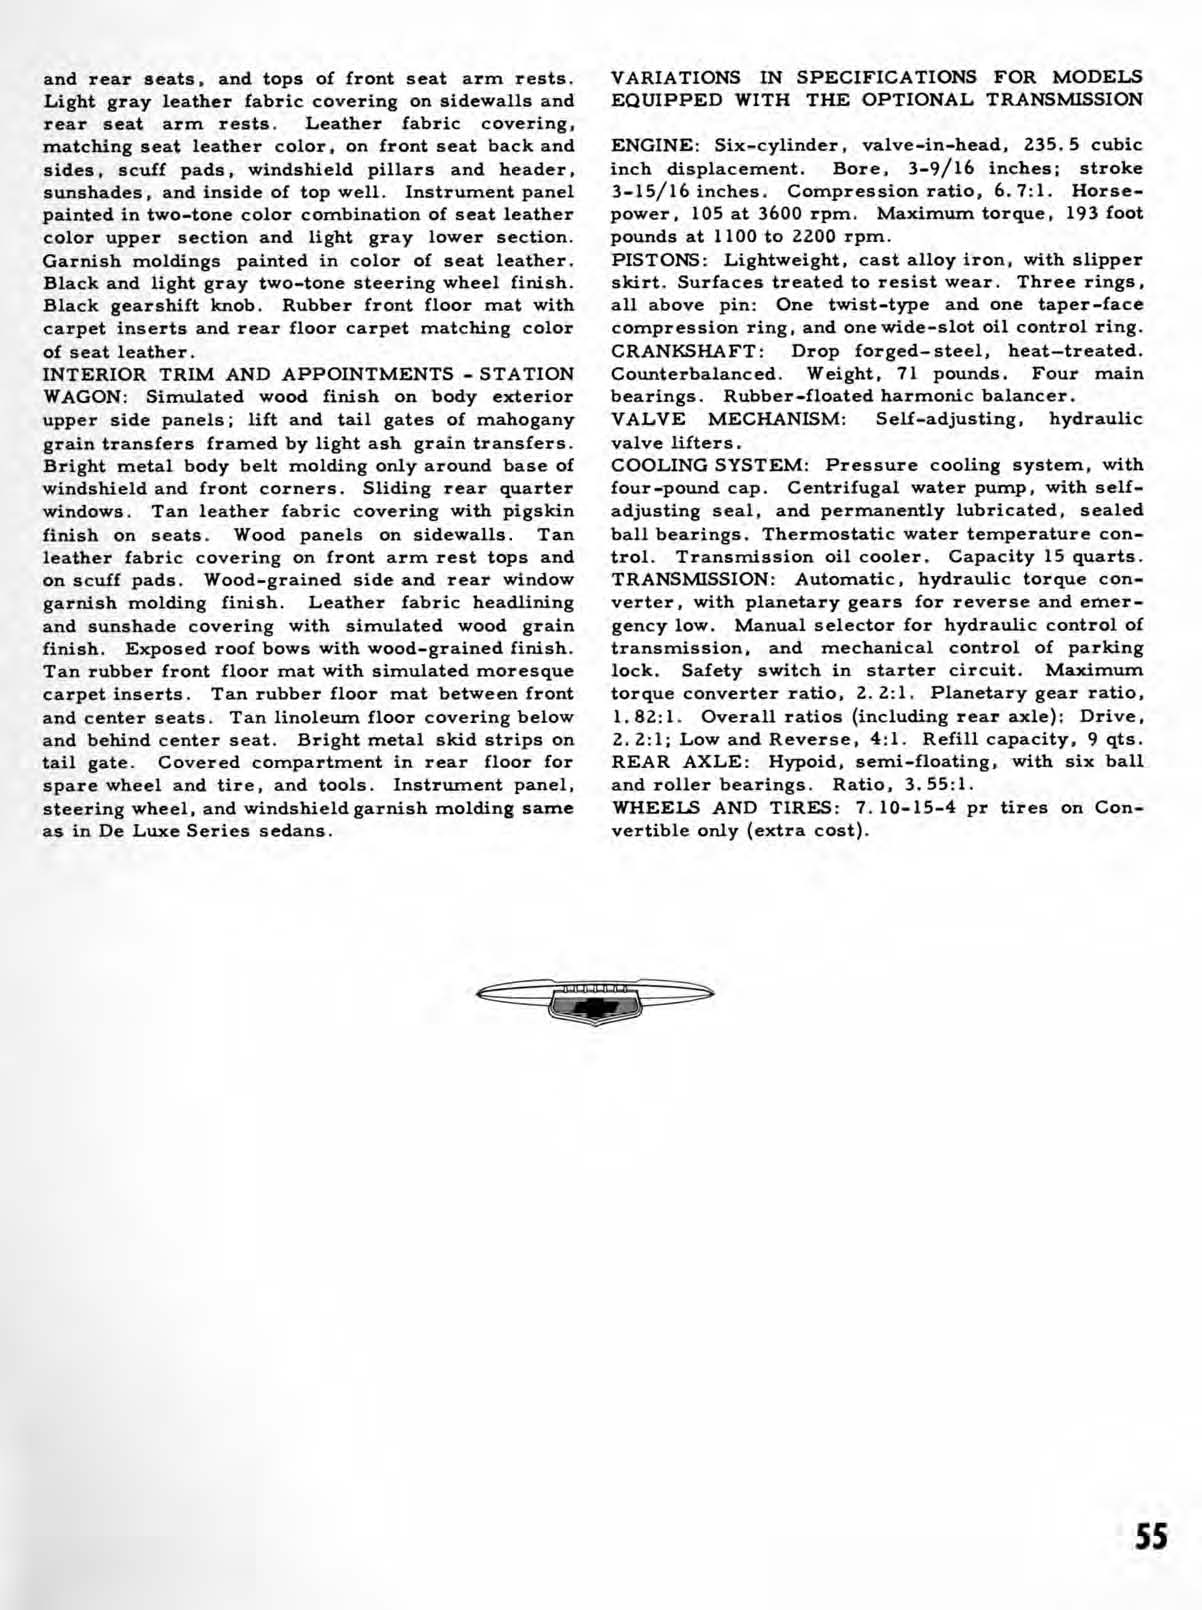 1951_Chevrolet_Engineering_Features-55